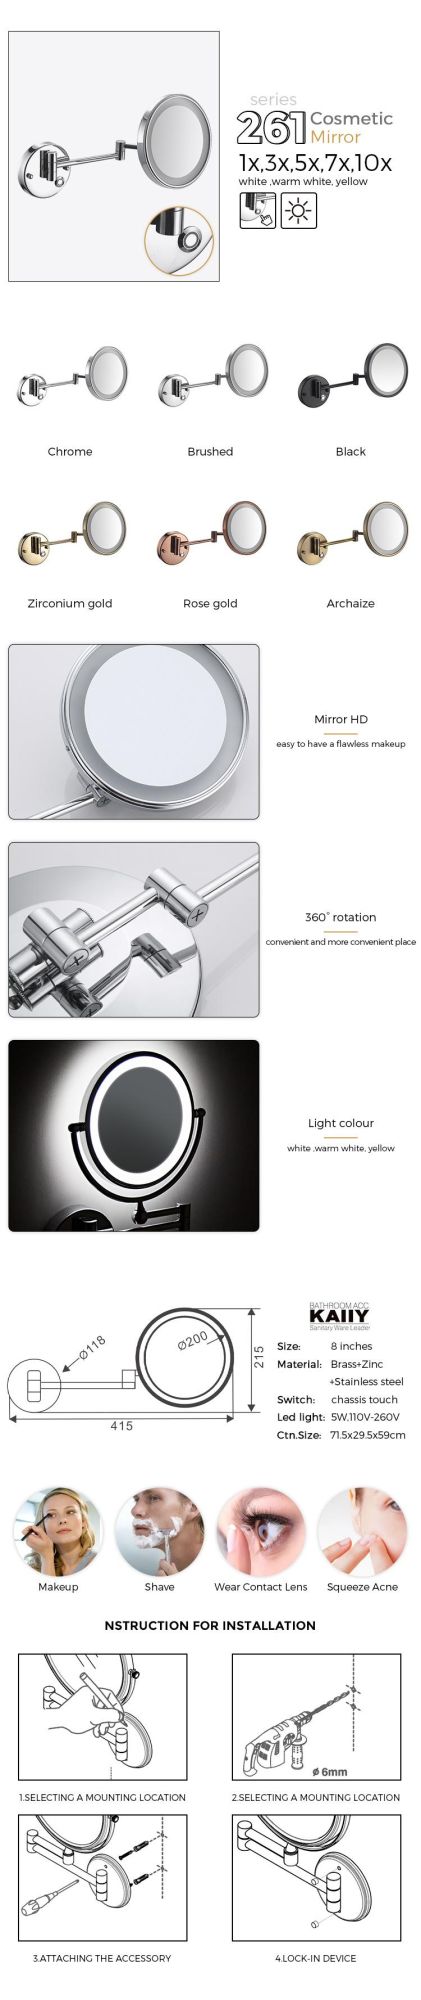 Kaiiy LED Mirror China Supplier Modern Wall Mounted Bathroom Accessories Bath Mirror